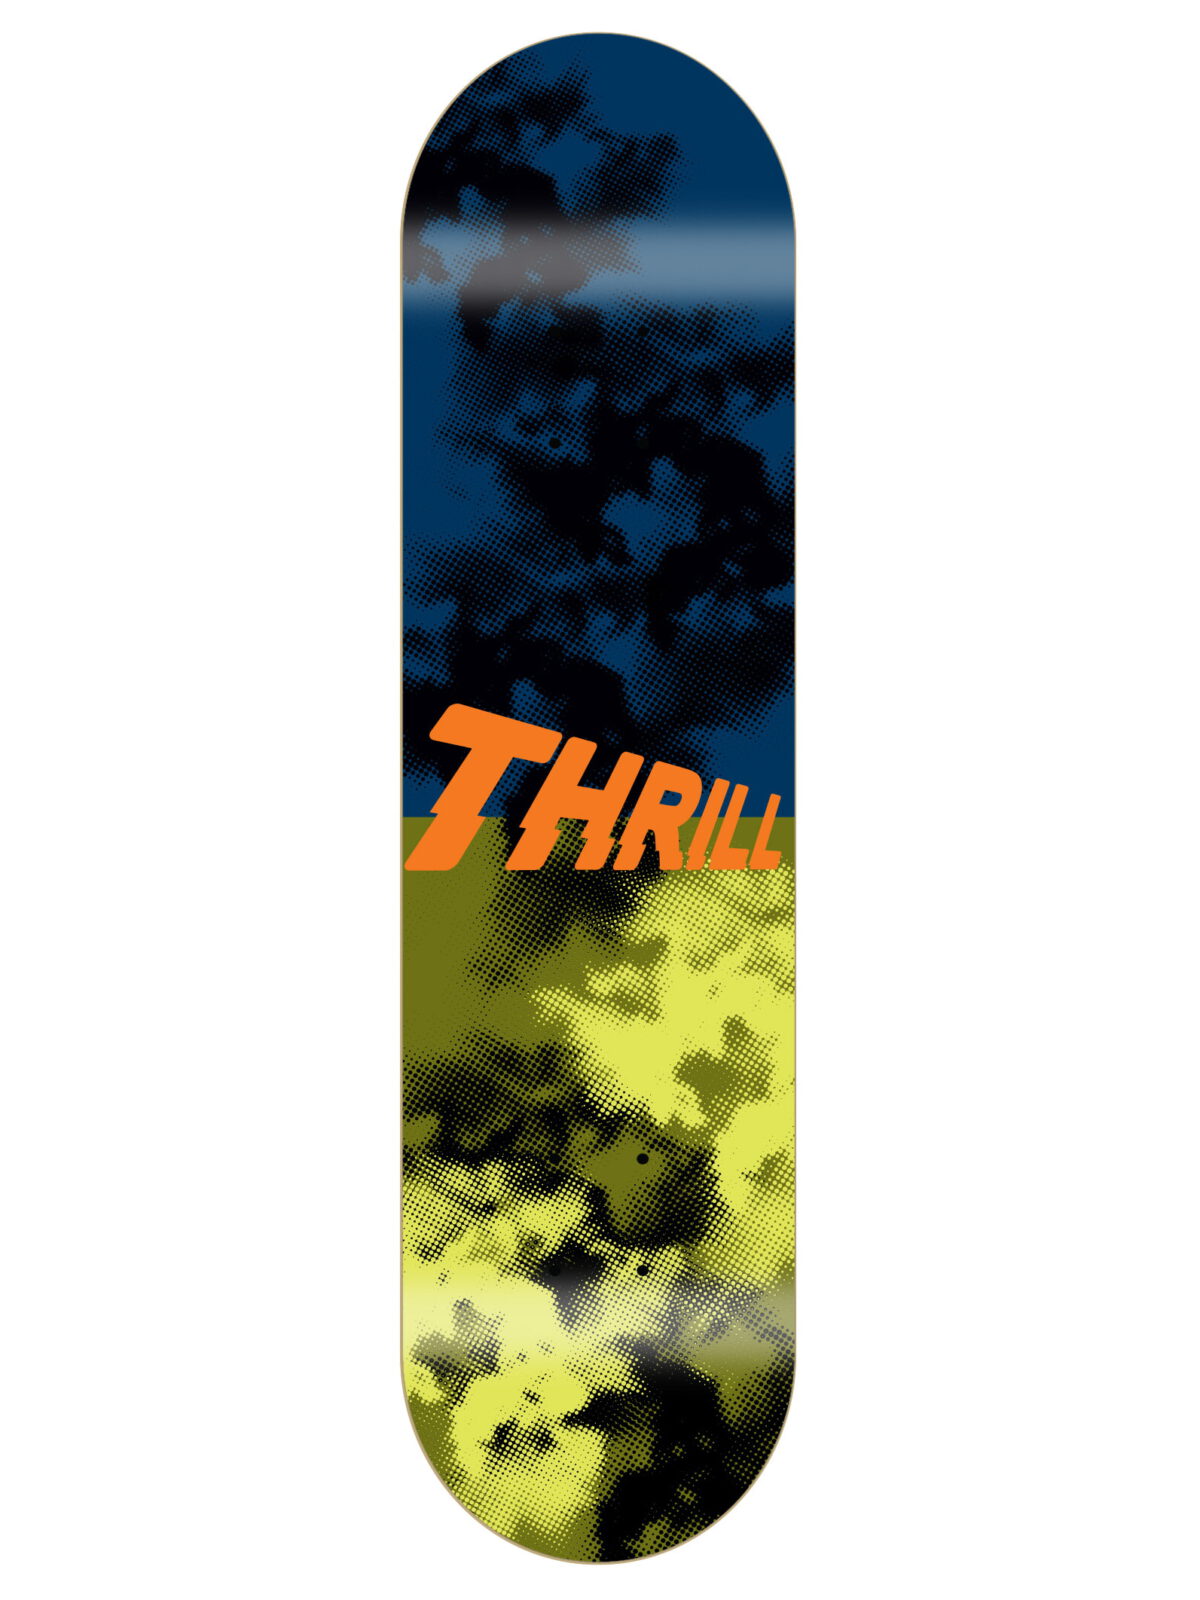 Thrill_Skateboards_Smoke